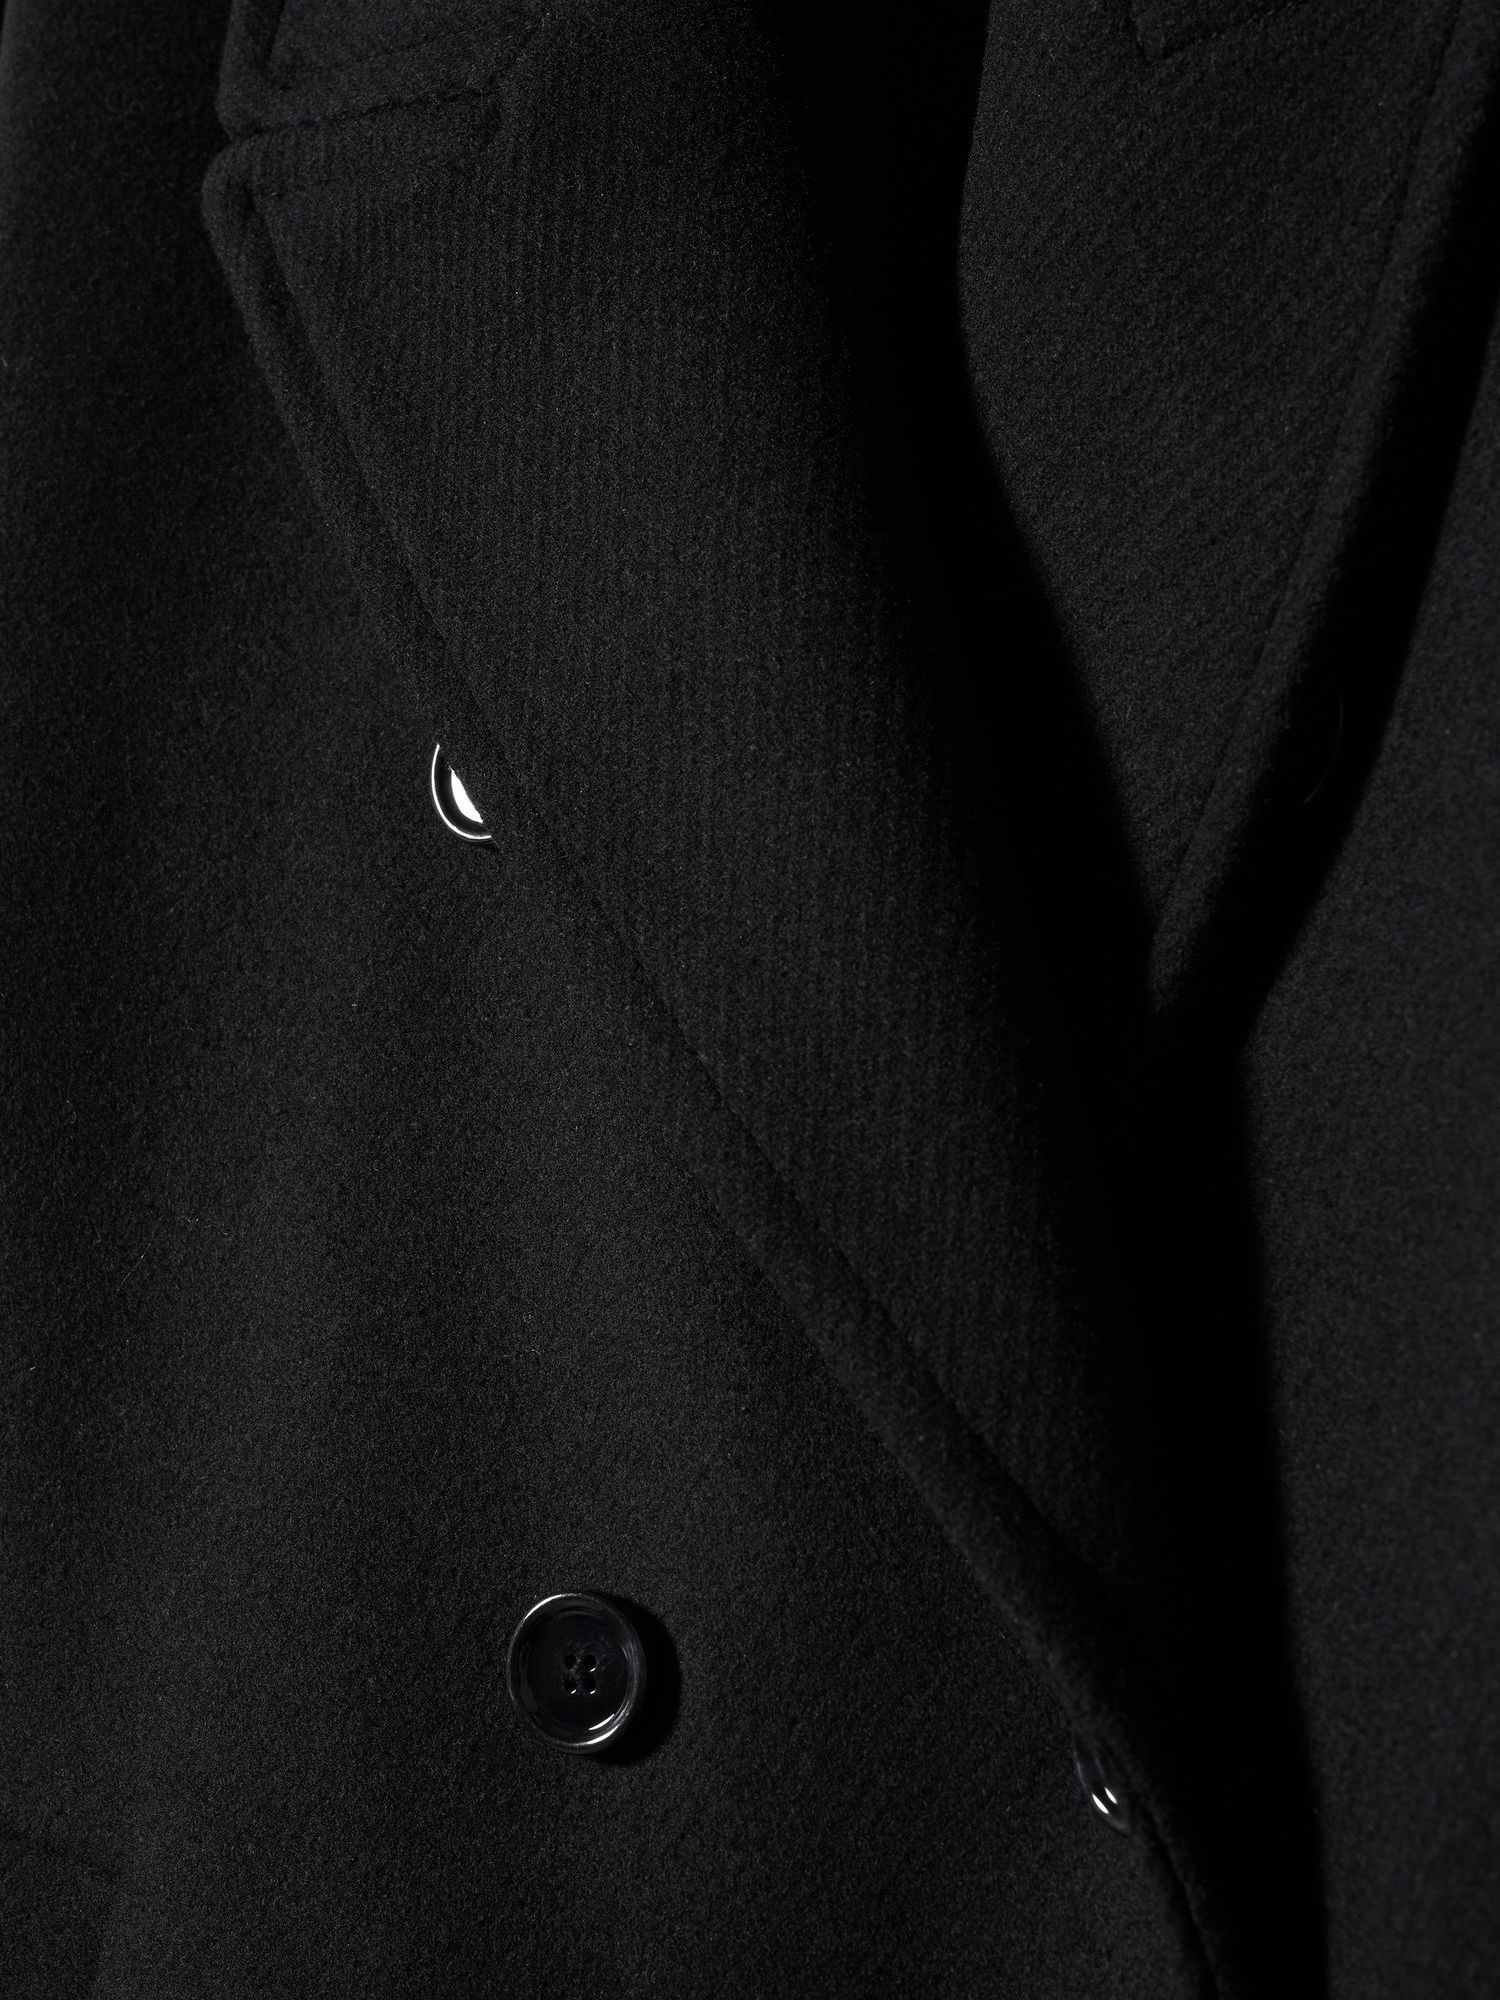 Mango Gauguin Wool Blend Coat, Black at John Lewis & Partners